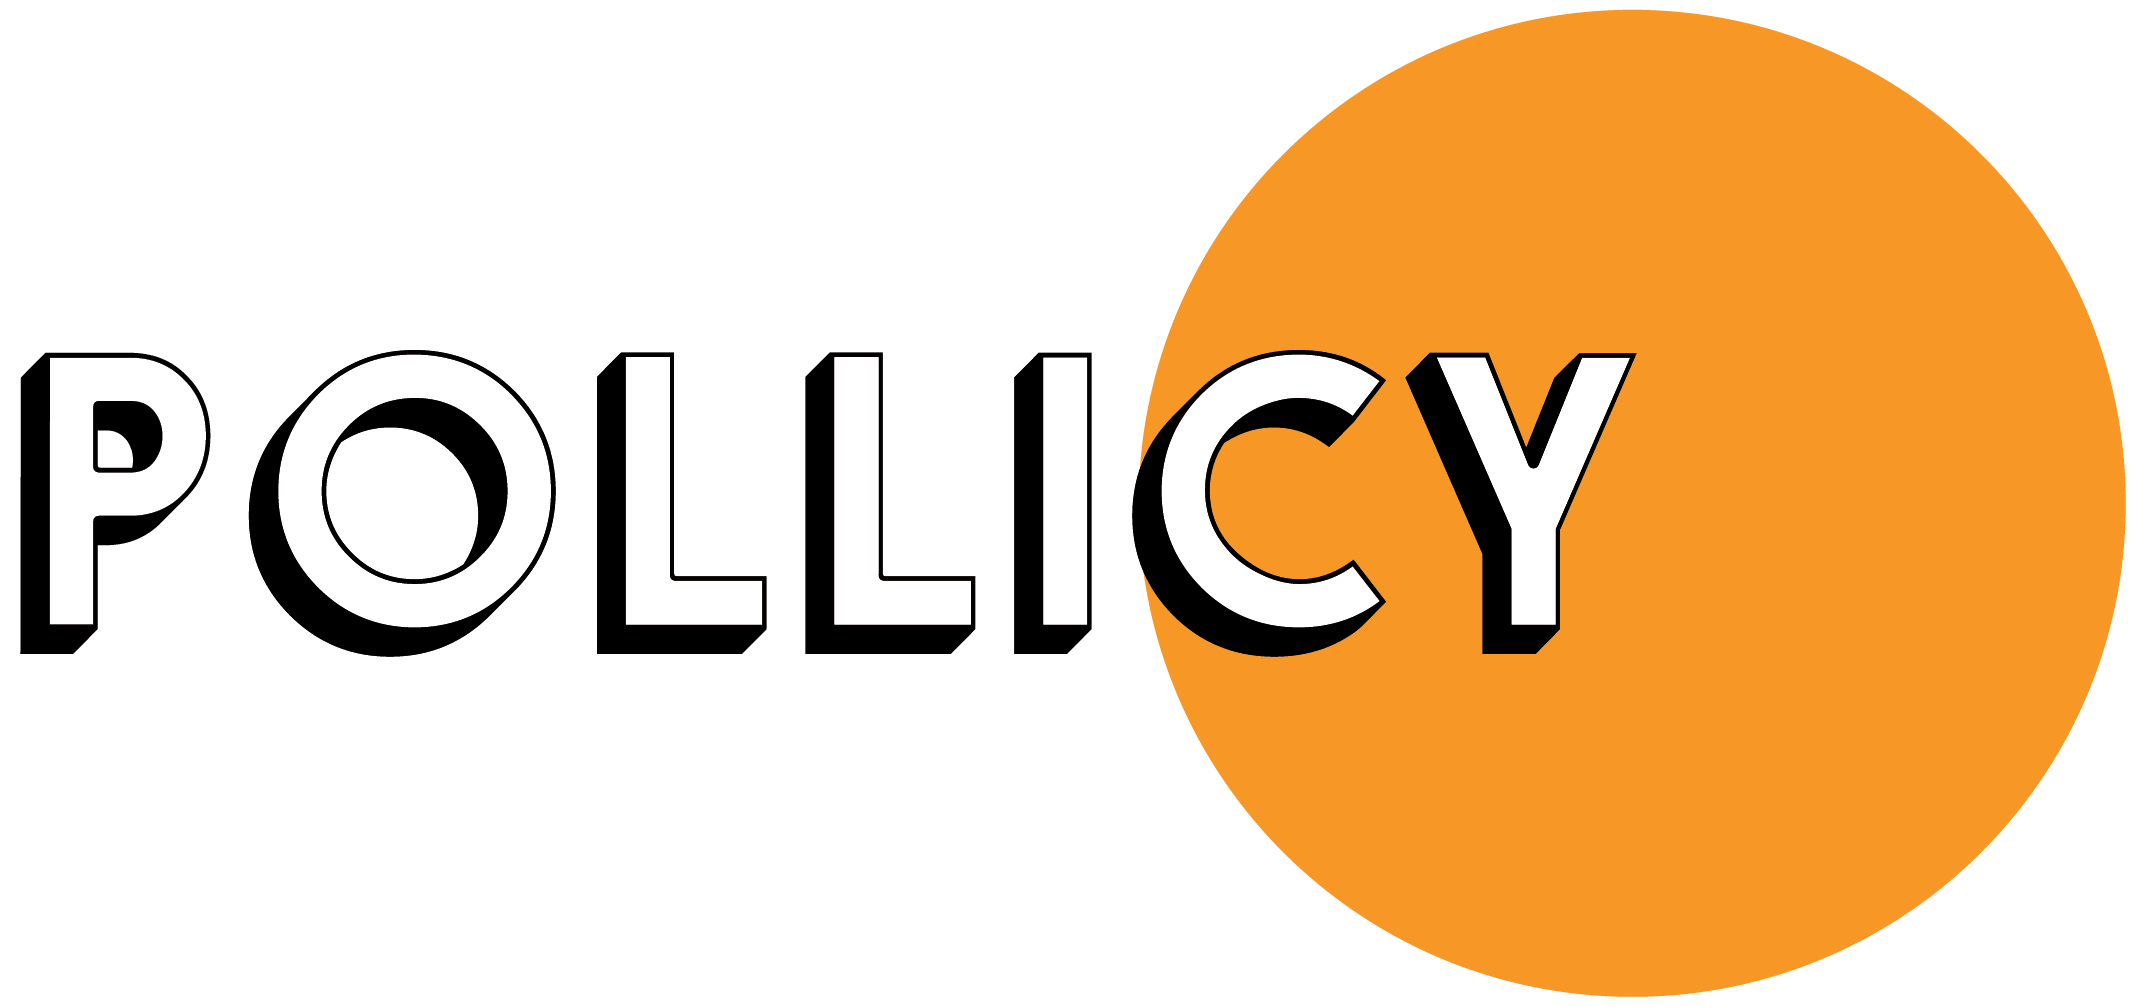 pollicy logo